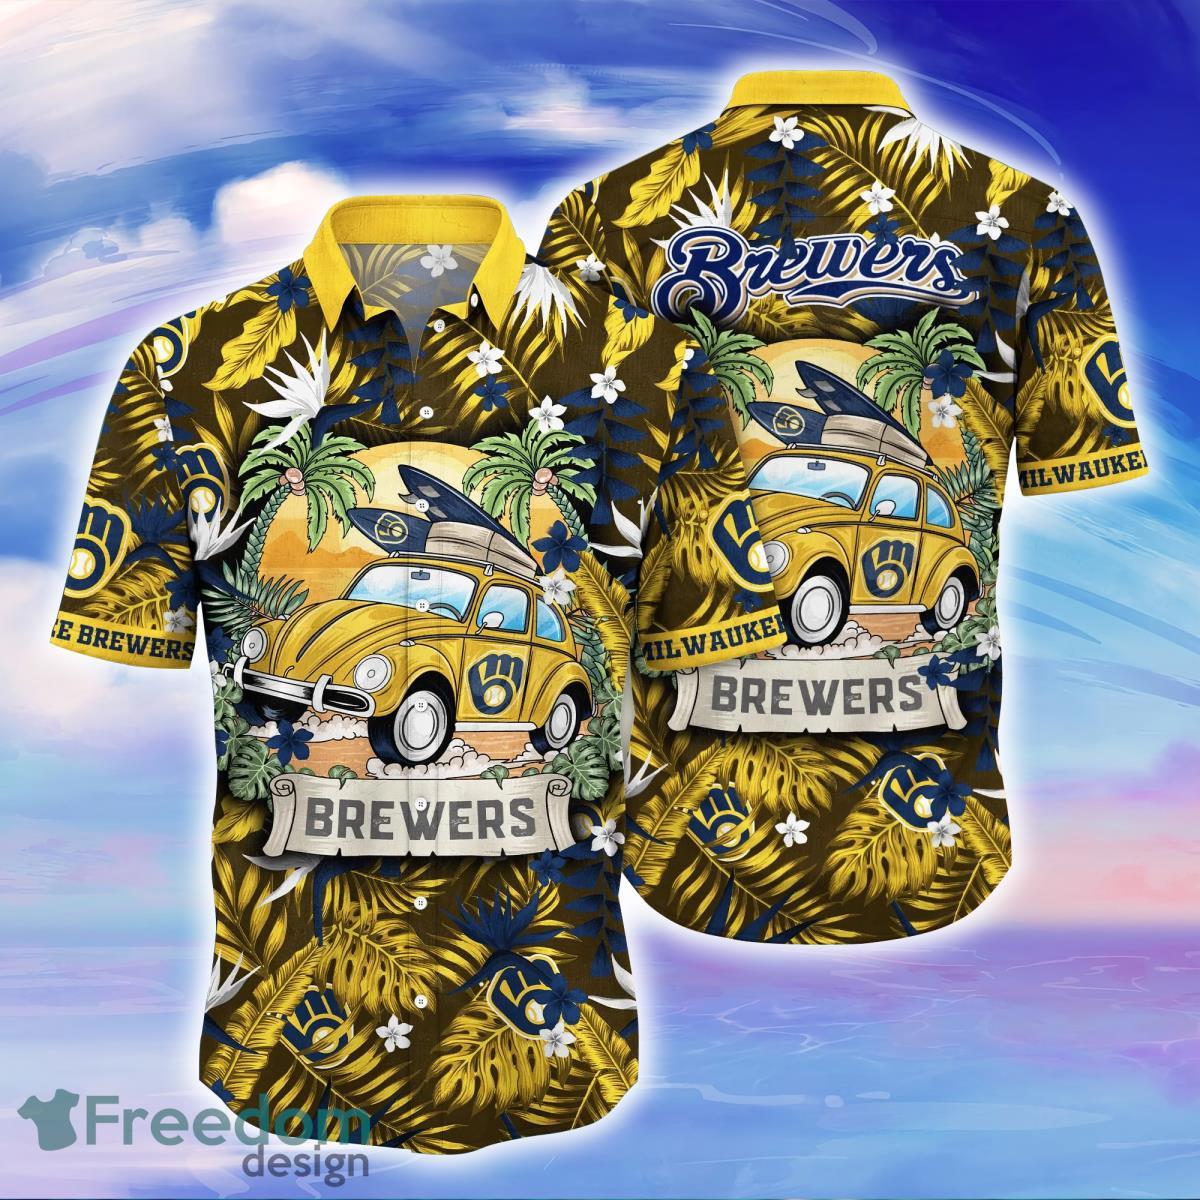 Milwaukee Brewers MLB Flower Hawaiian Shirt Great Gift For Men Women Fans -  Freedomdesign